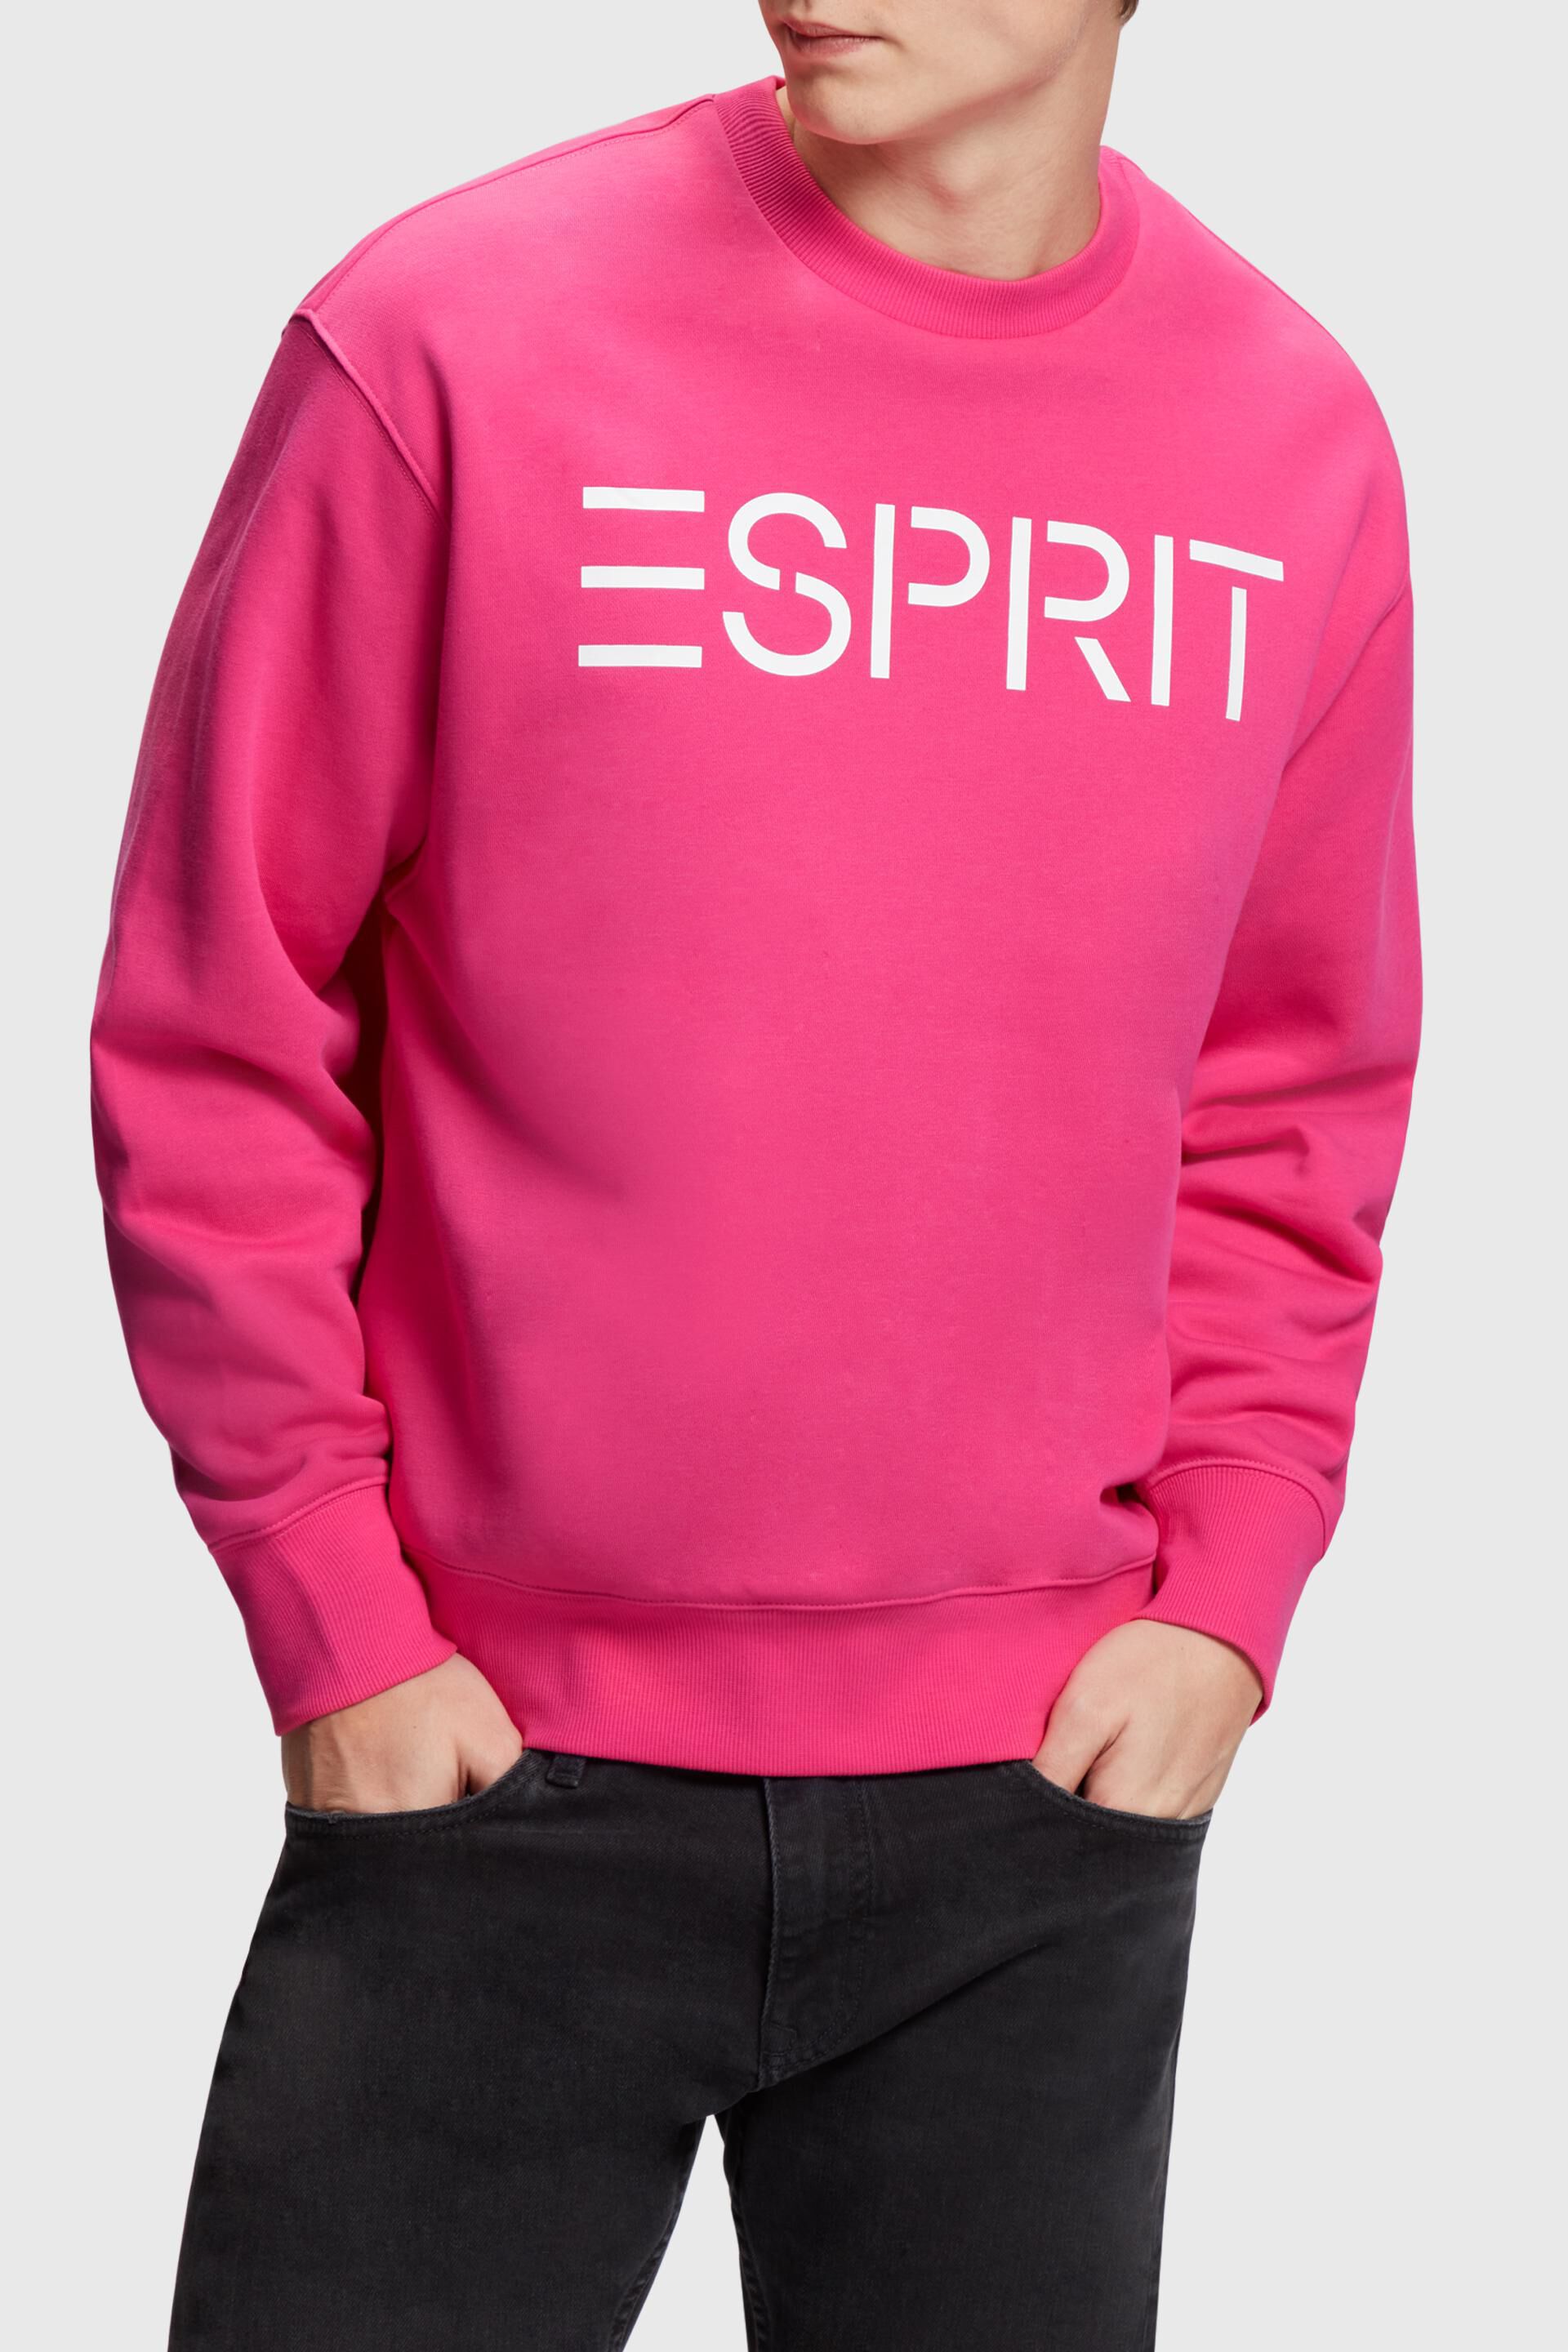 Esprit Bikini Logo sweatshirt